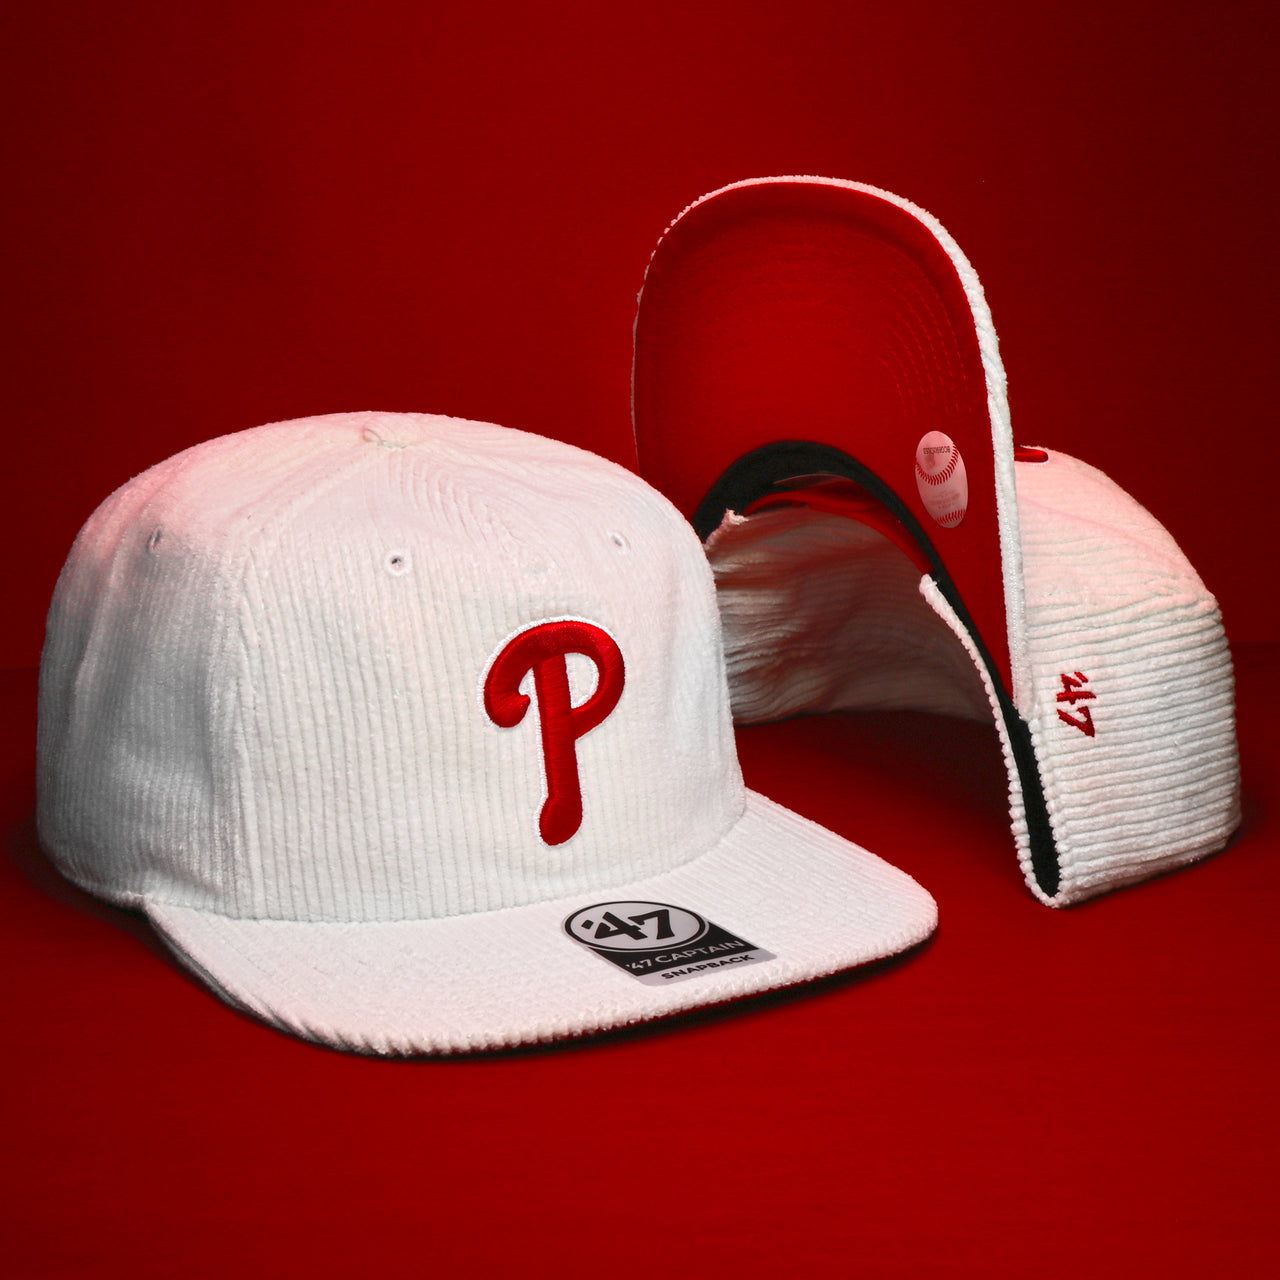 The Philadelphia Phillies Corduroy Snapback Hat | White Corduroy Snap Cap with a background